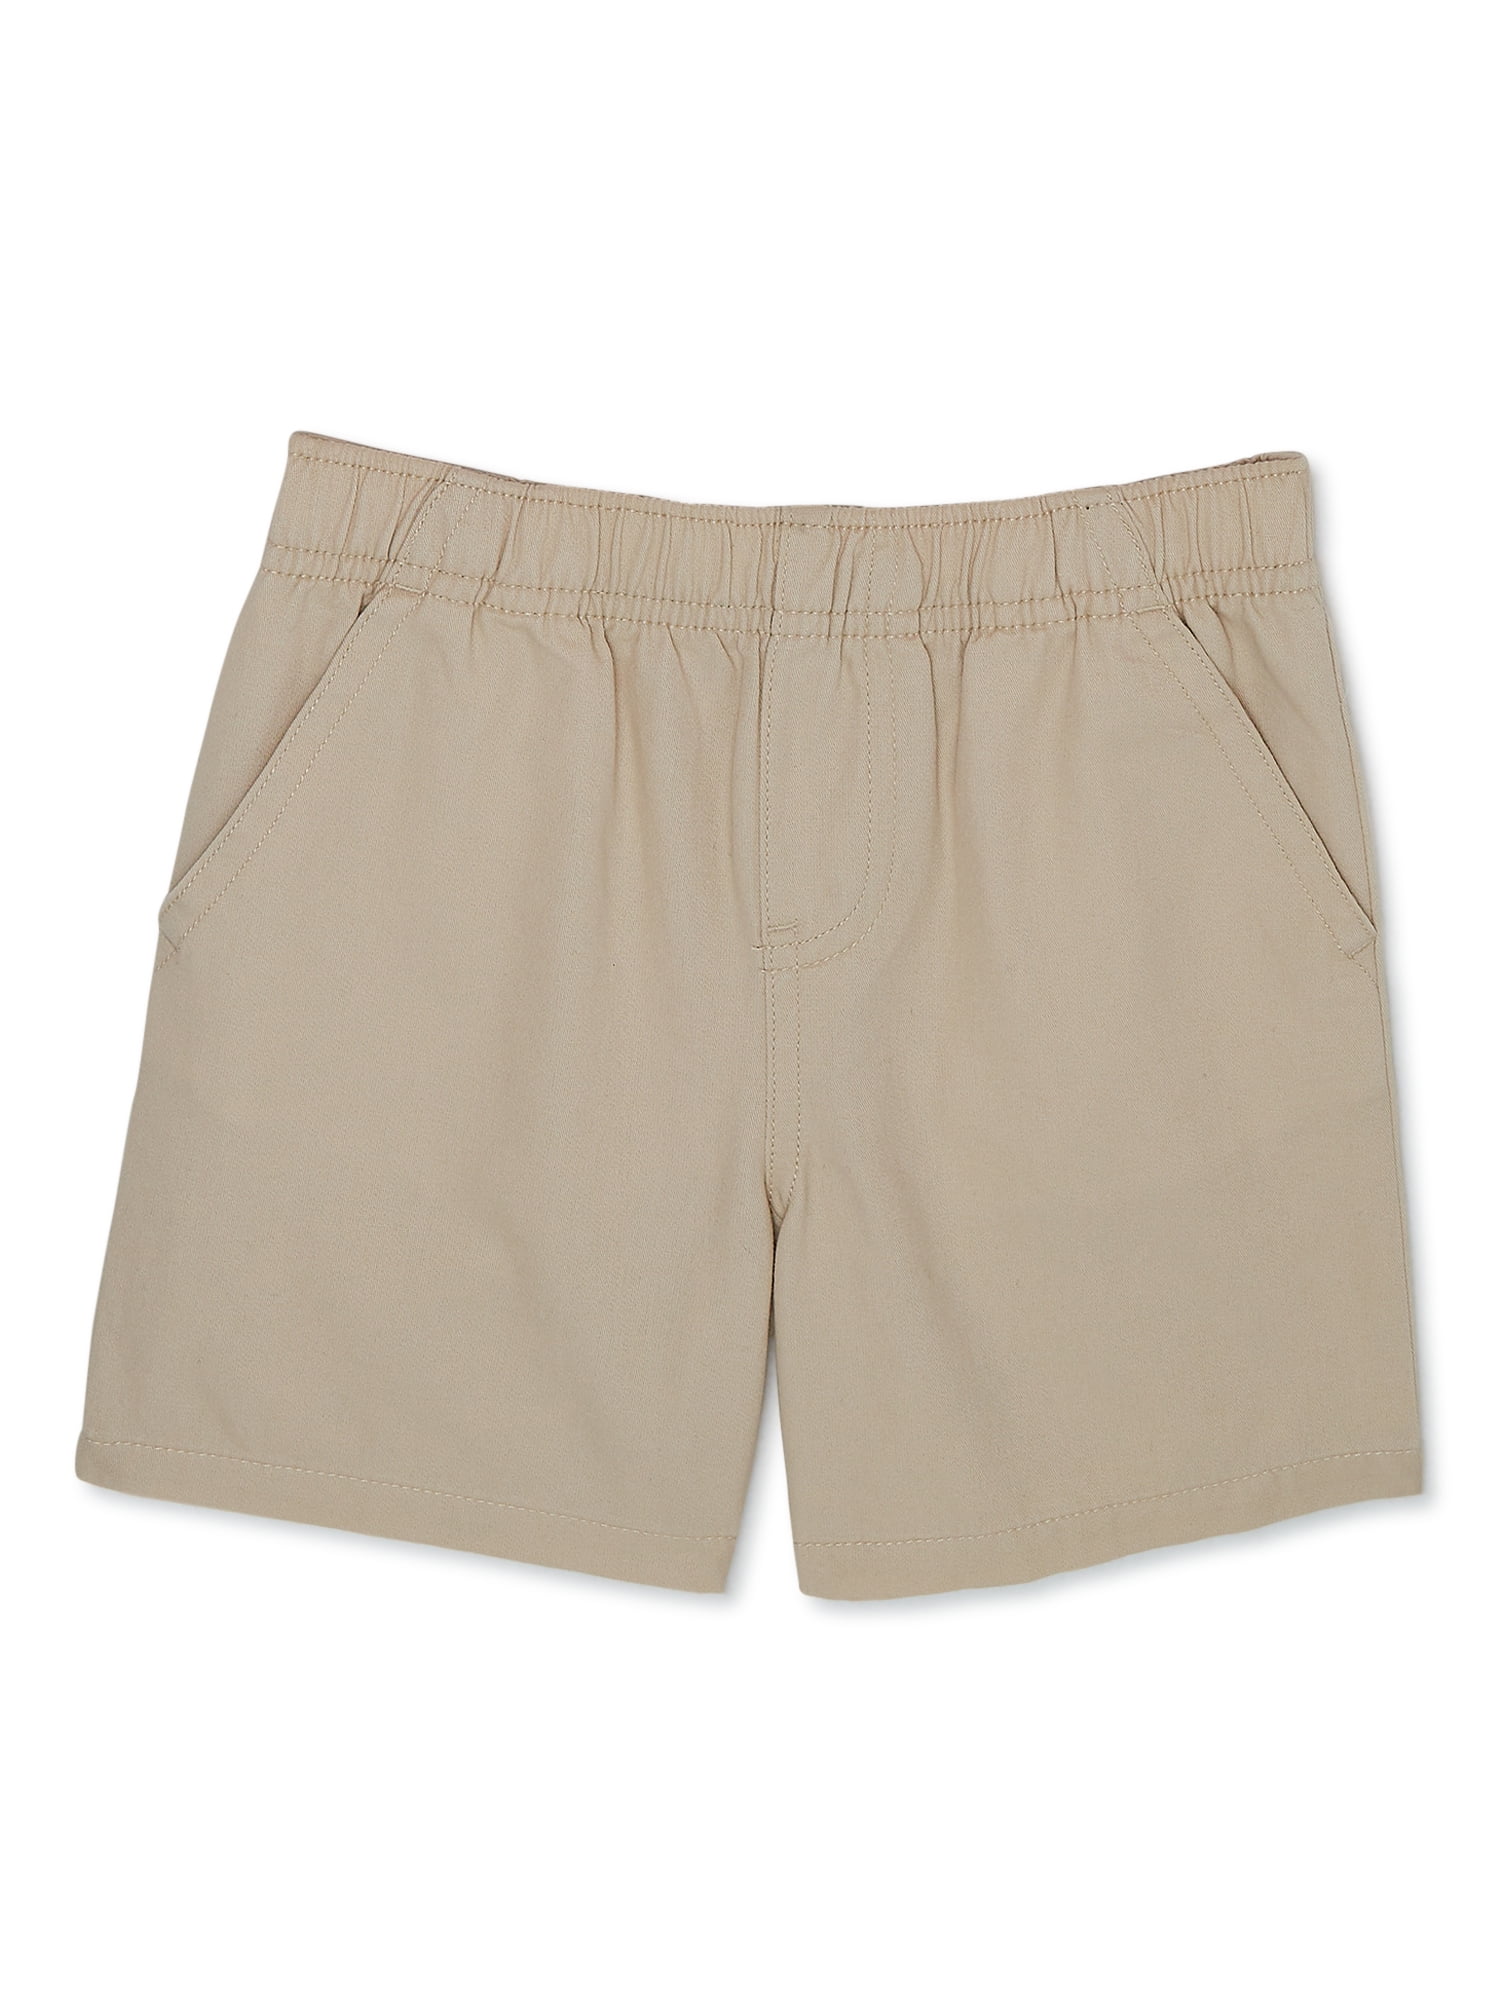 Garanimals Toddler Boy Woven Shorts, Sizes 18M-5T - Walmart.com